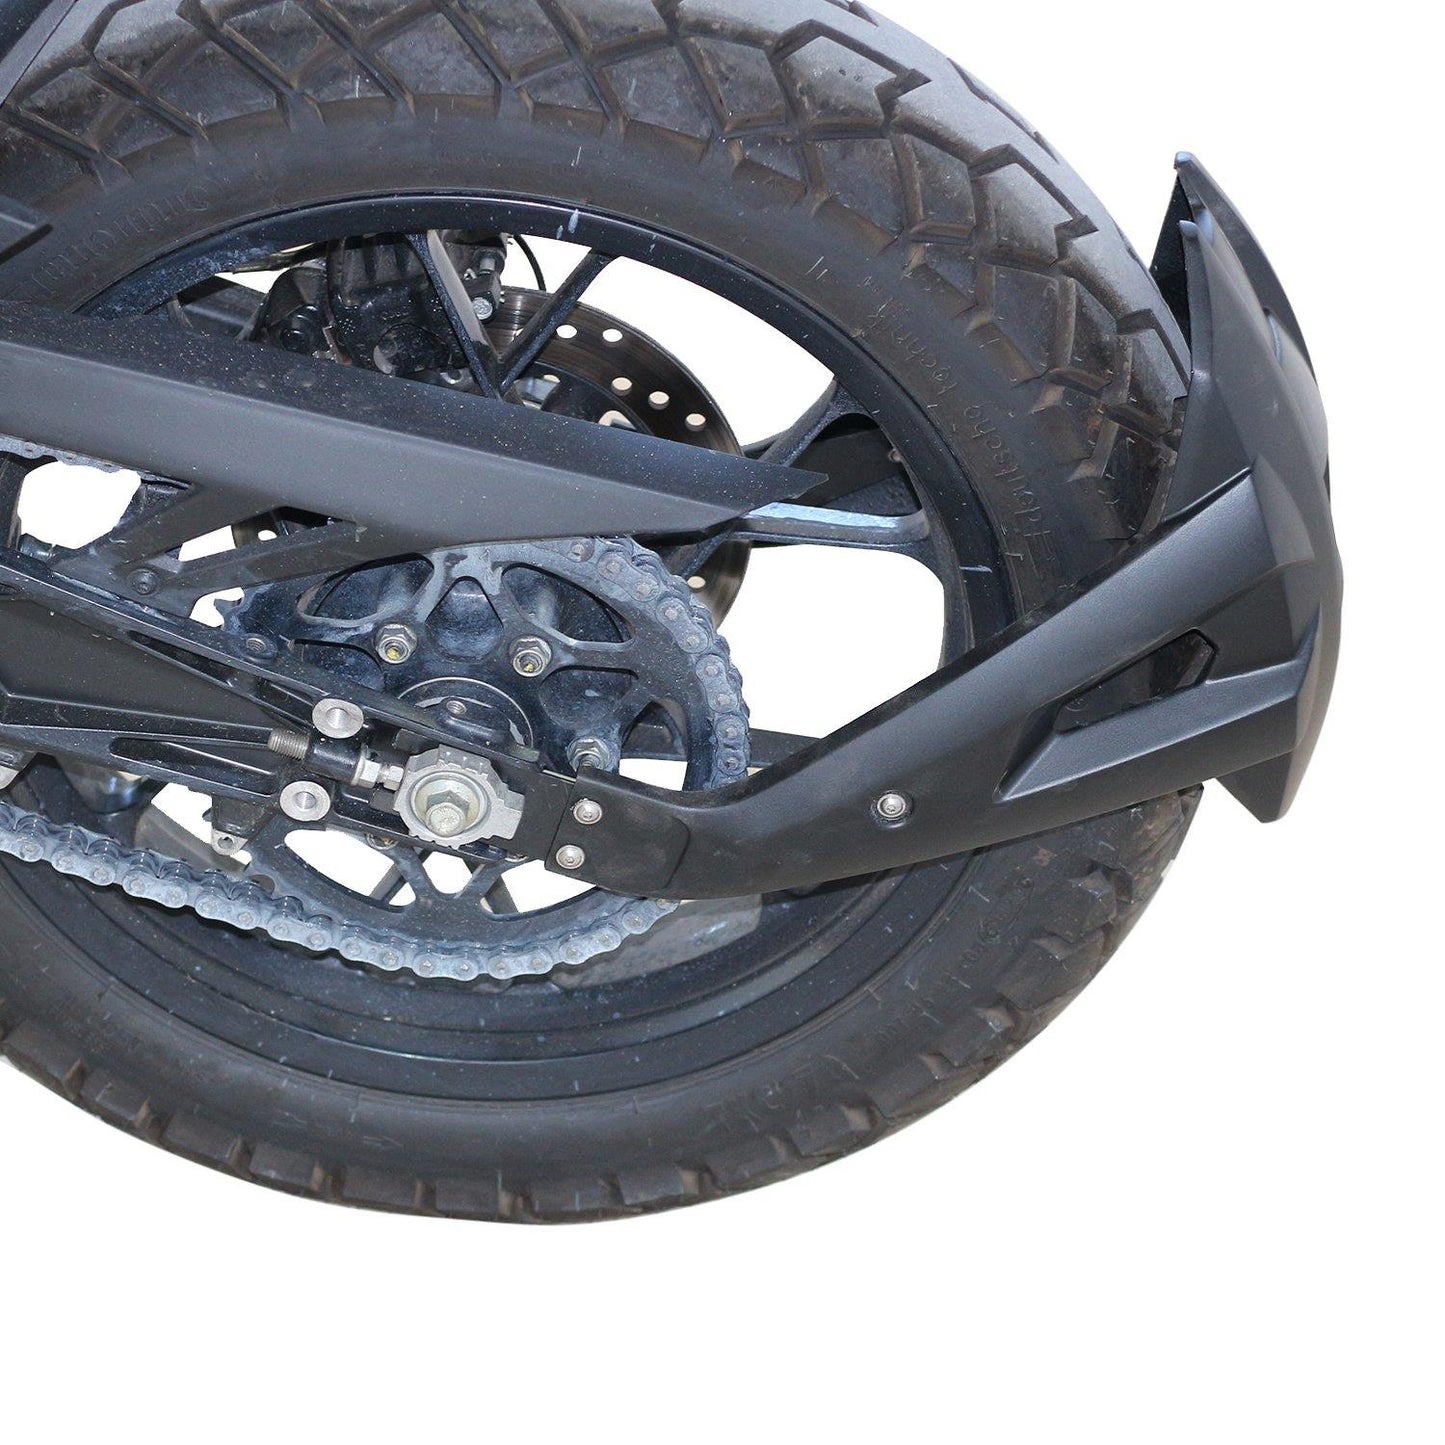 KTM 390 Adventure rear wheel cover fender splash mud guard 20-21